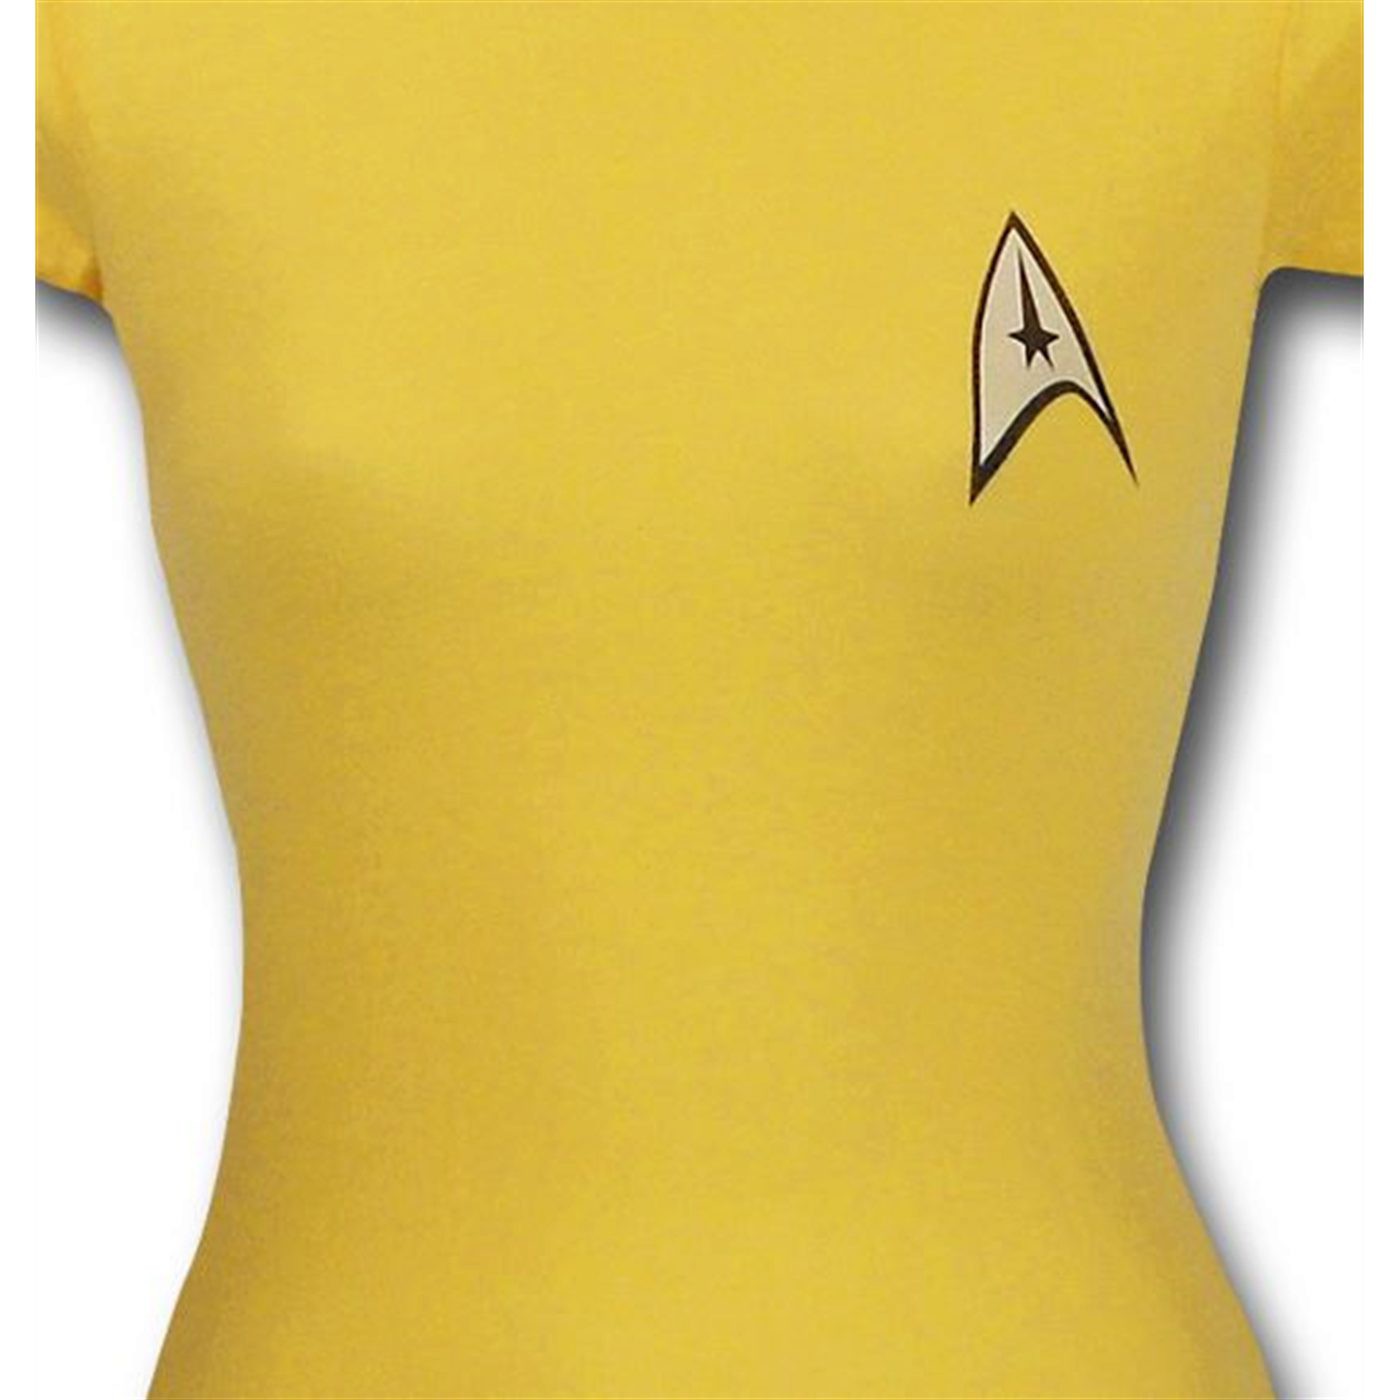 Star Trek Women's Captain's Uniform T-Shirt